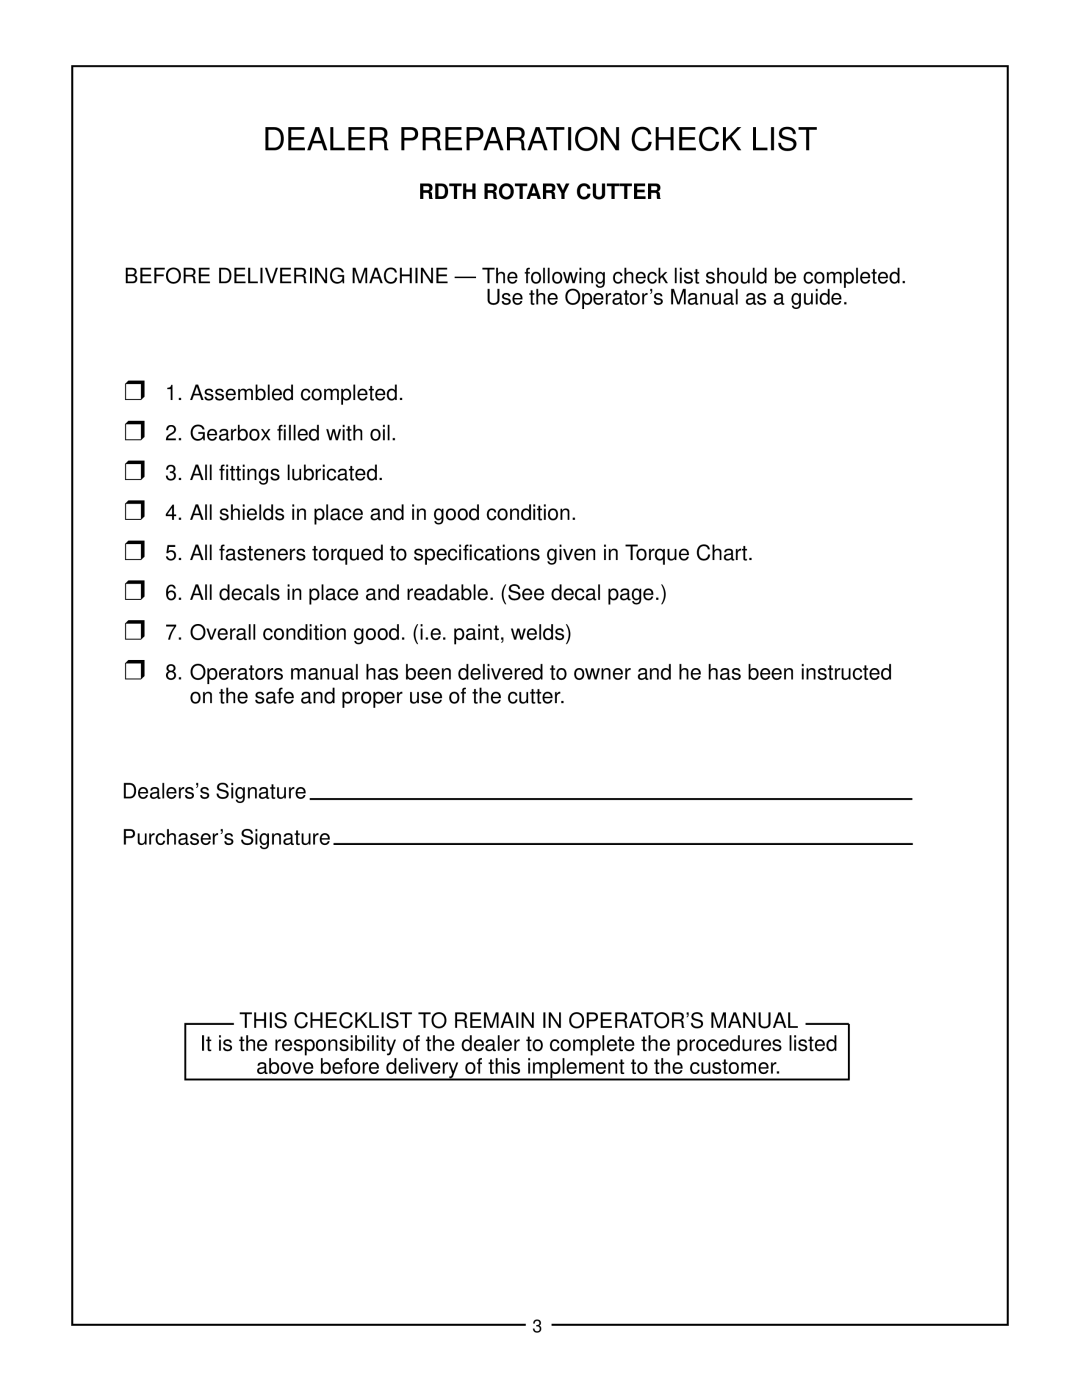 Bush Hog RDTH 84 manual Rdth Rotary Cutter, Dealer Preparation Check List 